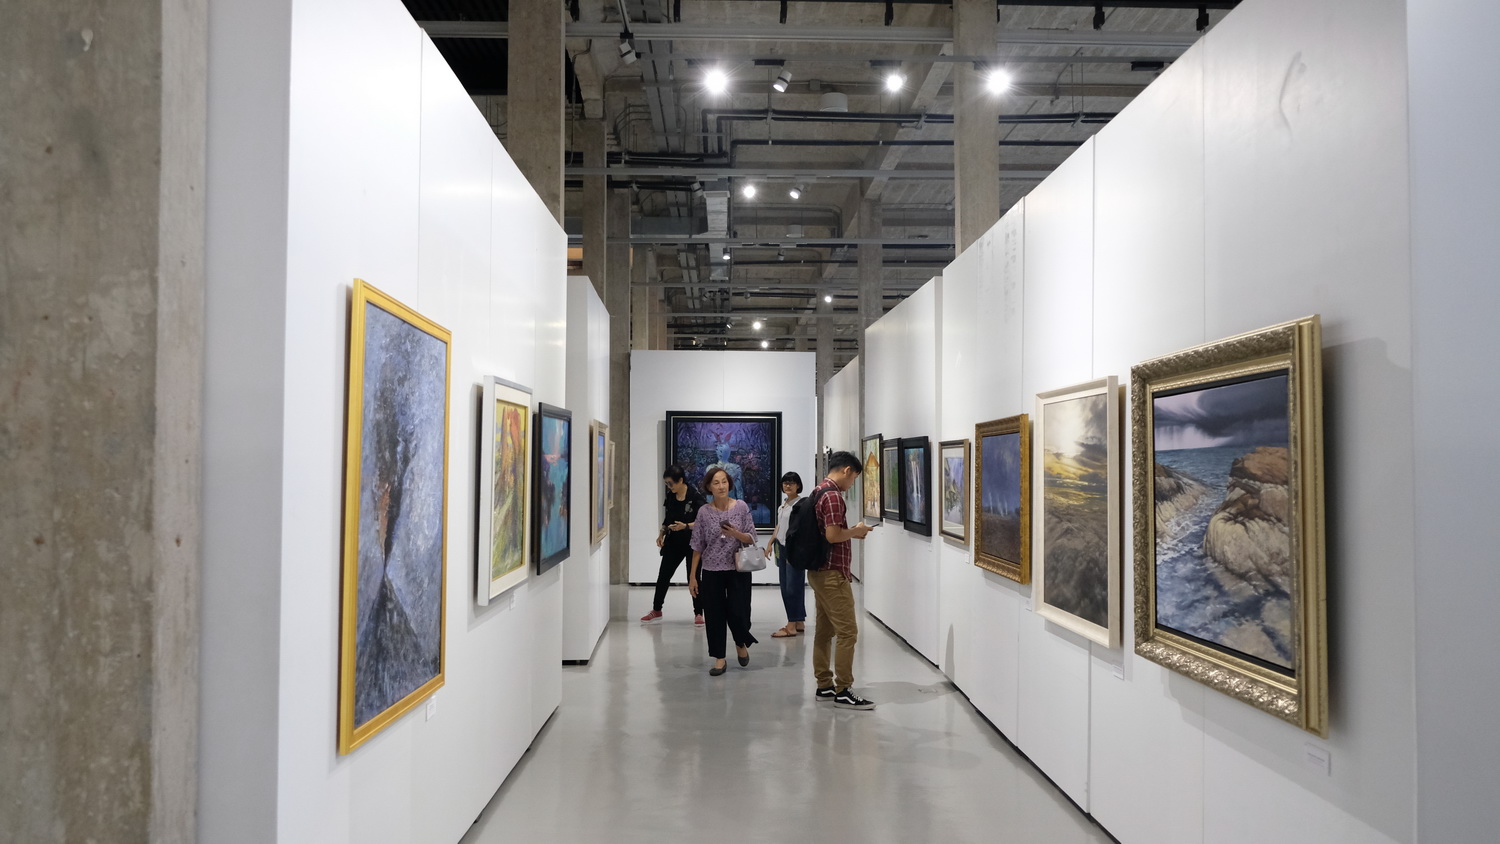 The 12th Art Exhibition of the International Visual Artist Association of Thailand | การแสดงนิทรรศการของสมาคมศิลปินทัศนศิลป์นานาชาติแห่งประเทศไทย ครั้งที่ 12